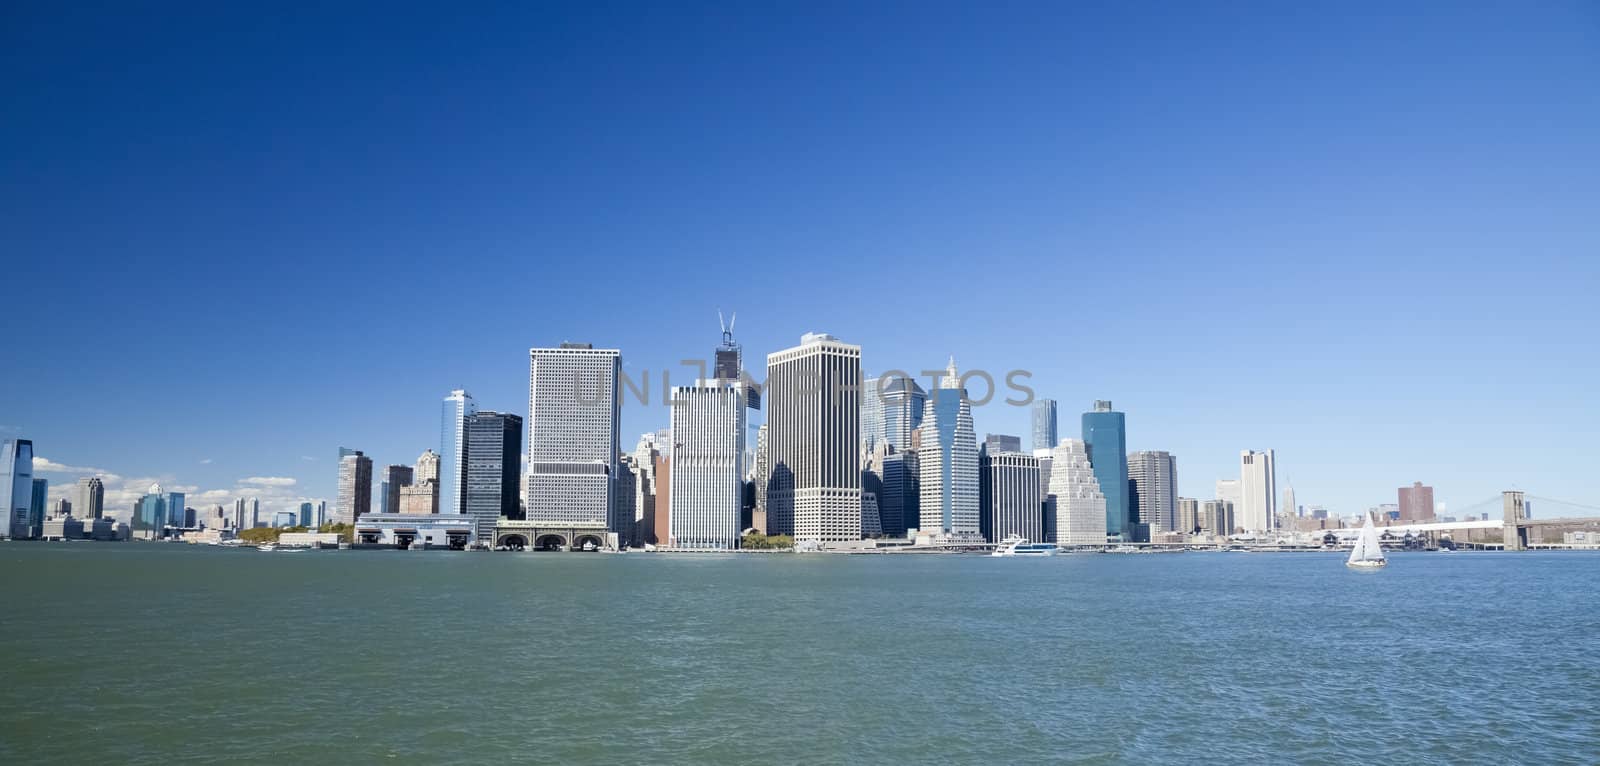 The New York City skyline by hanusst